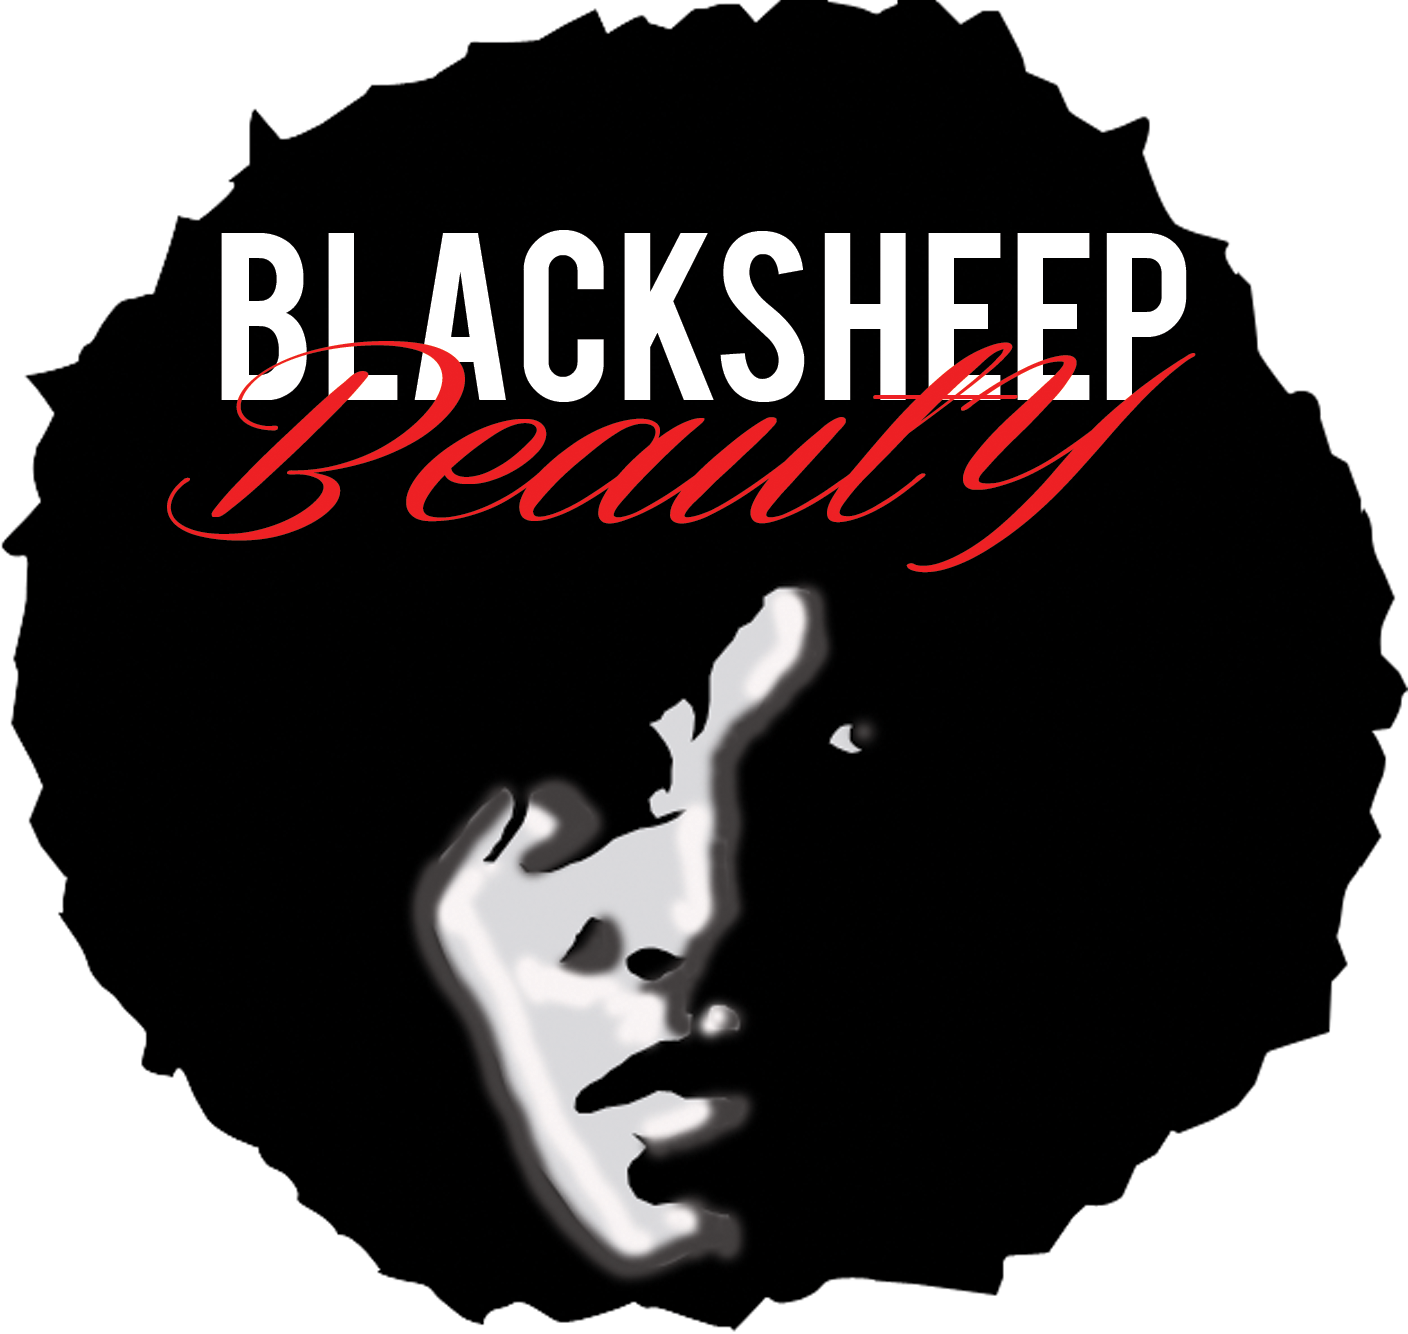 The Black Sheep Beauty